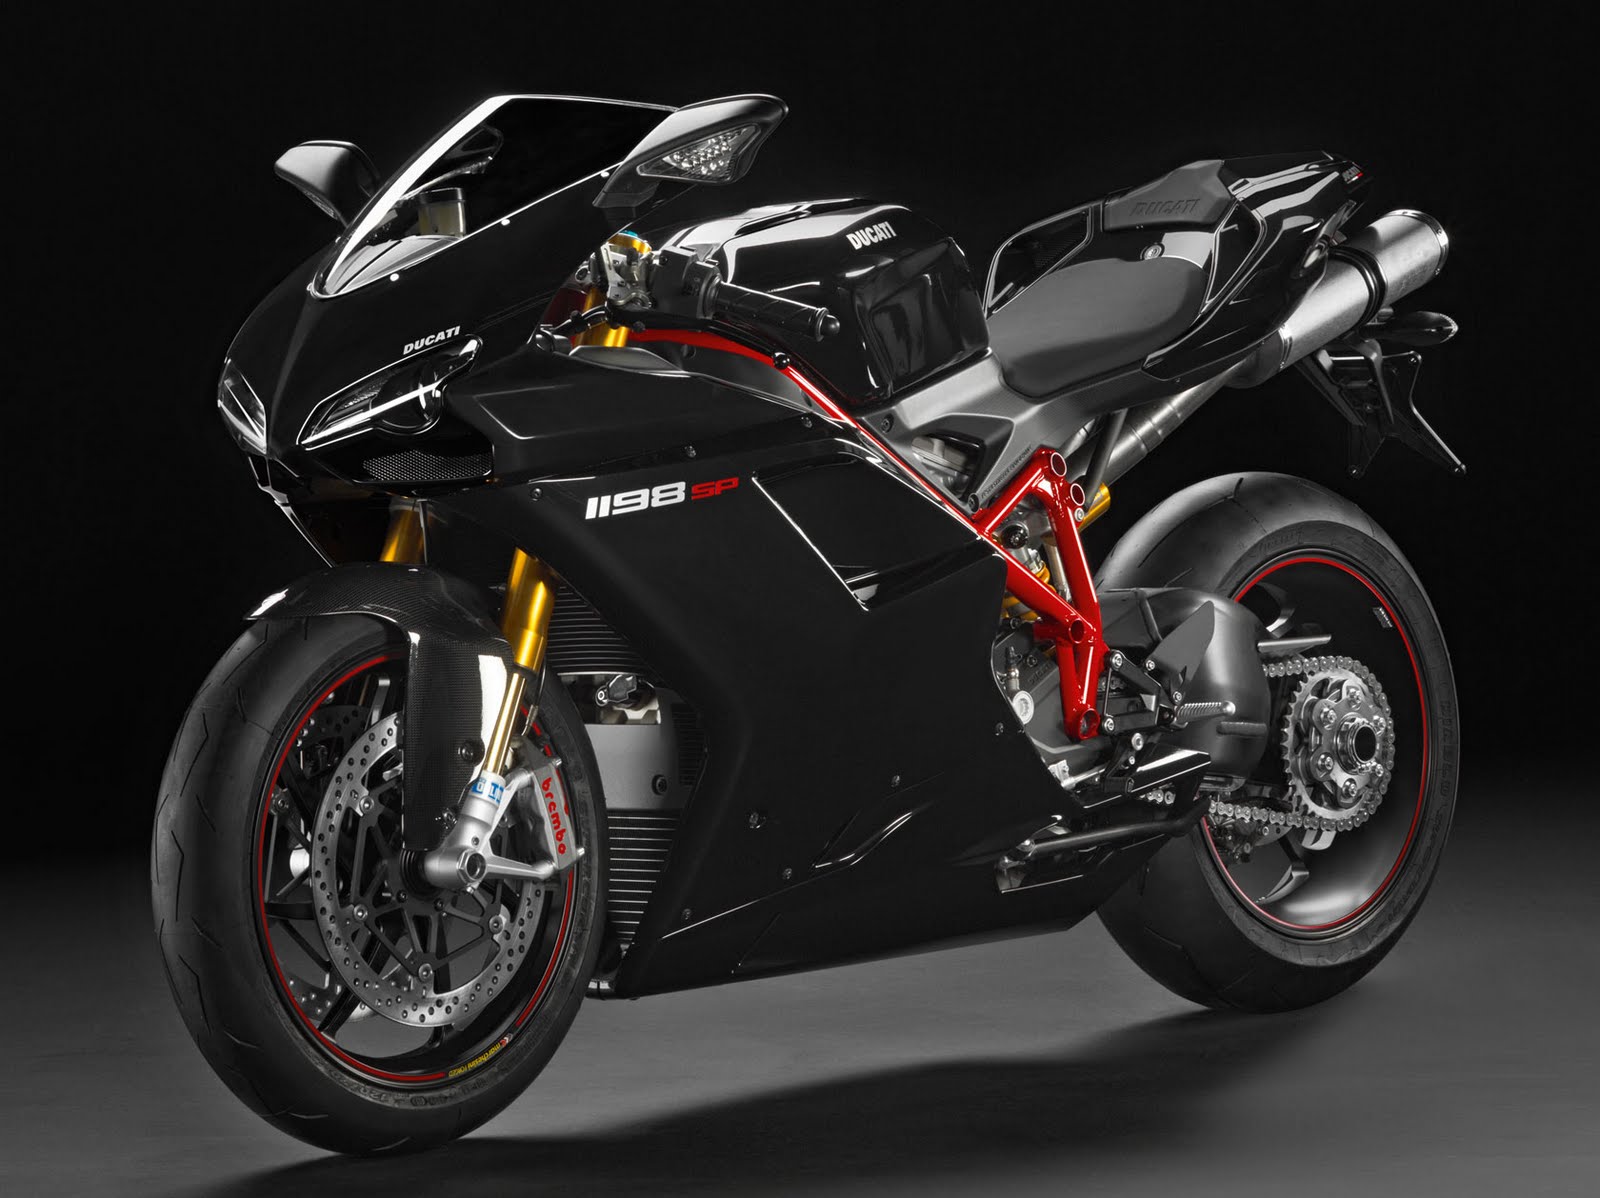 Top Motorcycle Wallpapers: 2011 Ducati 1198SP Superbike